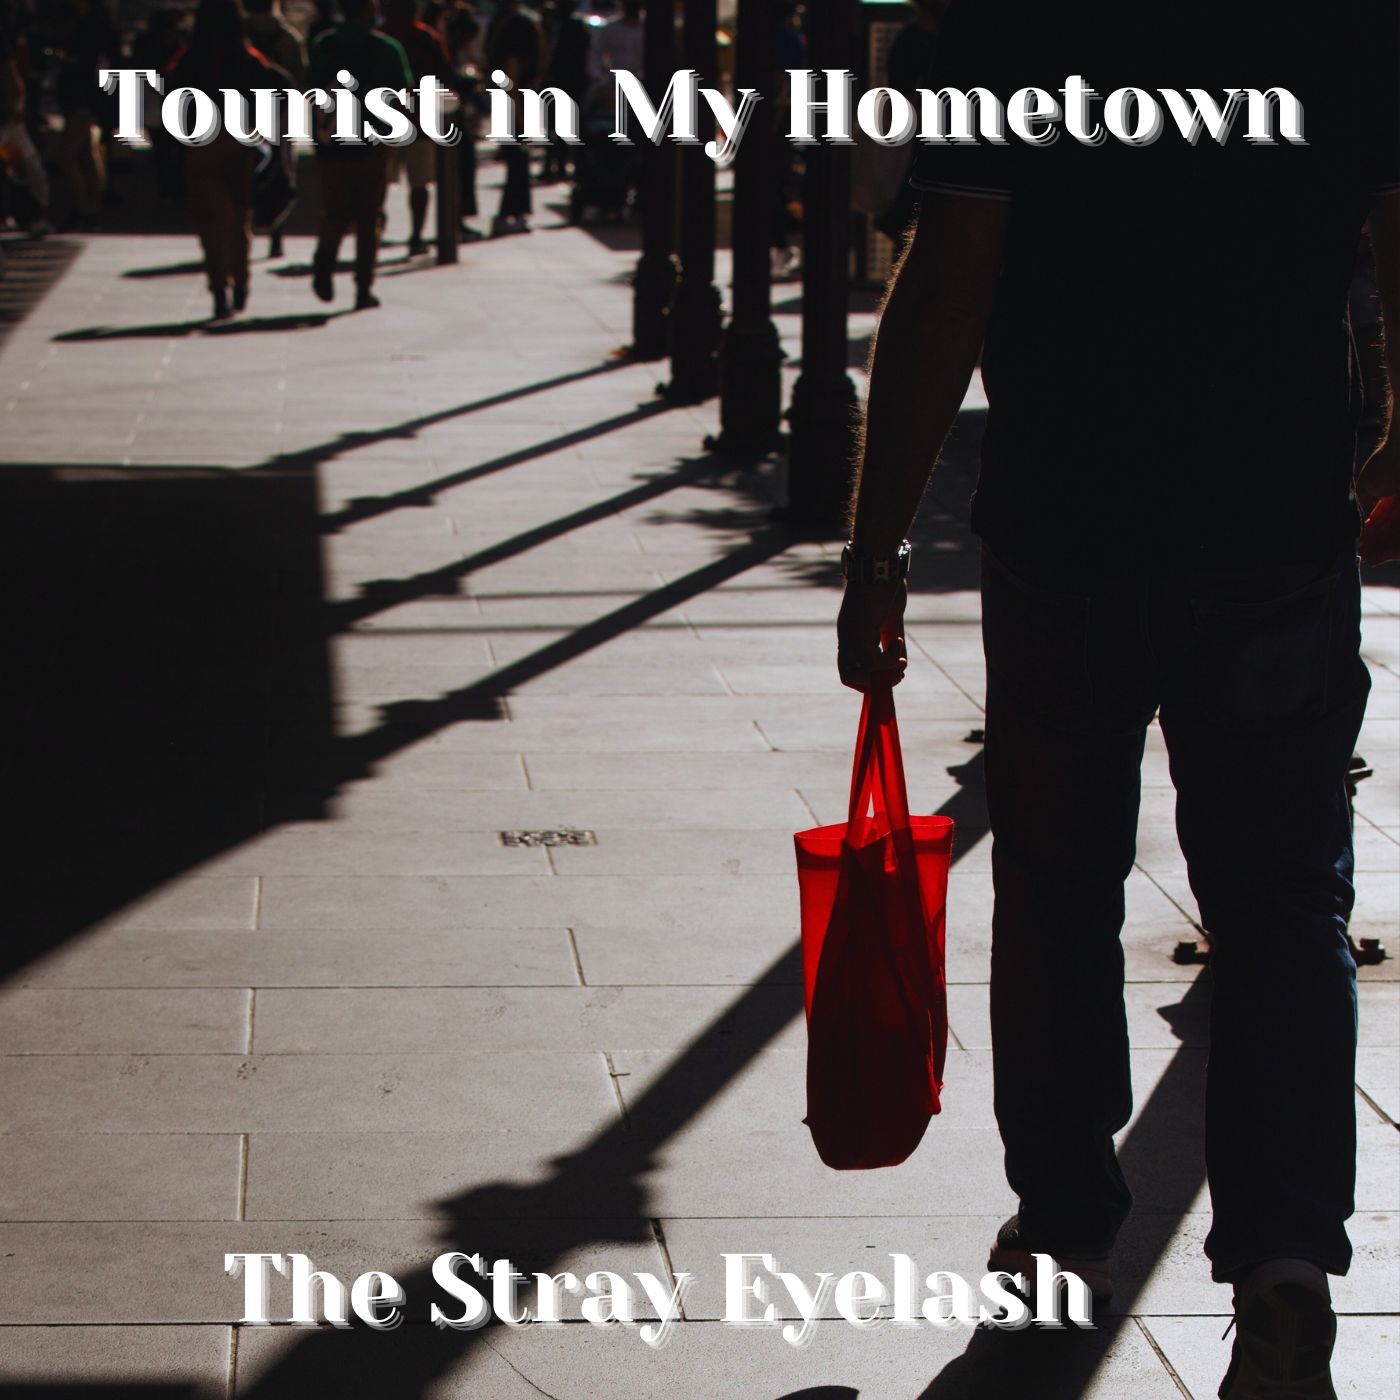 http://indiemusicpeople.com/Uploads/The_Stray_Eyelash_-_Tourist_in_My_Hometown_-The_Stray_Eyelash.jpg